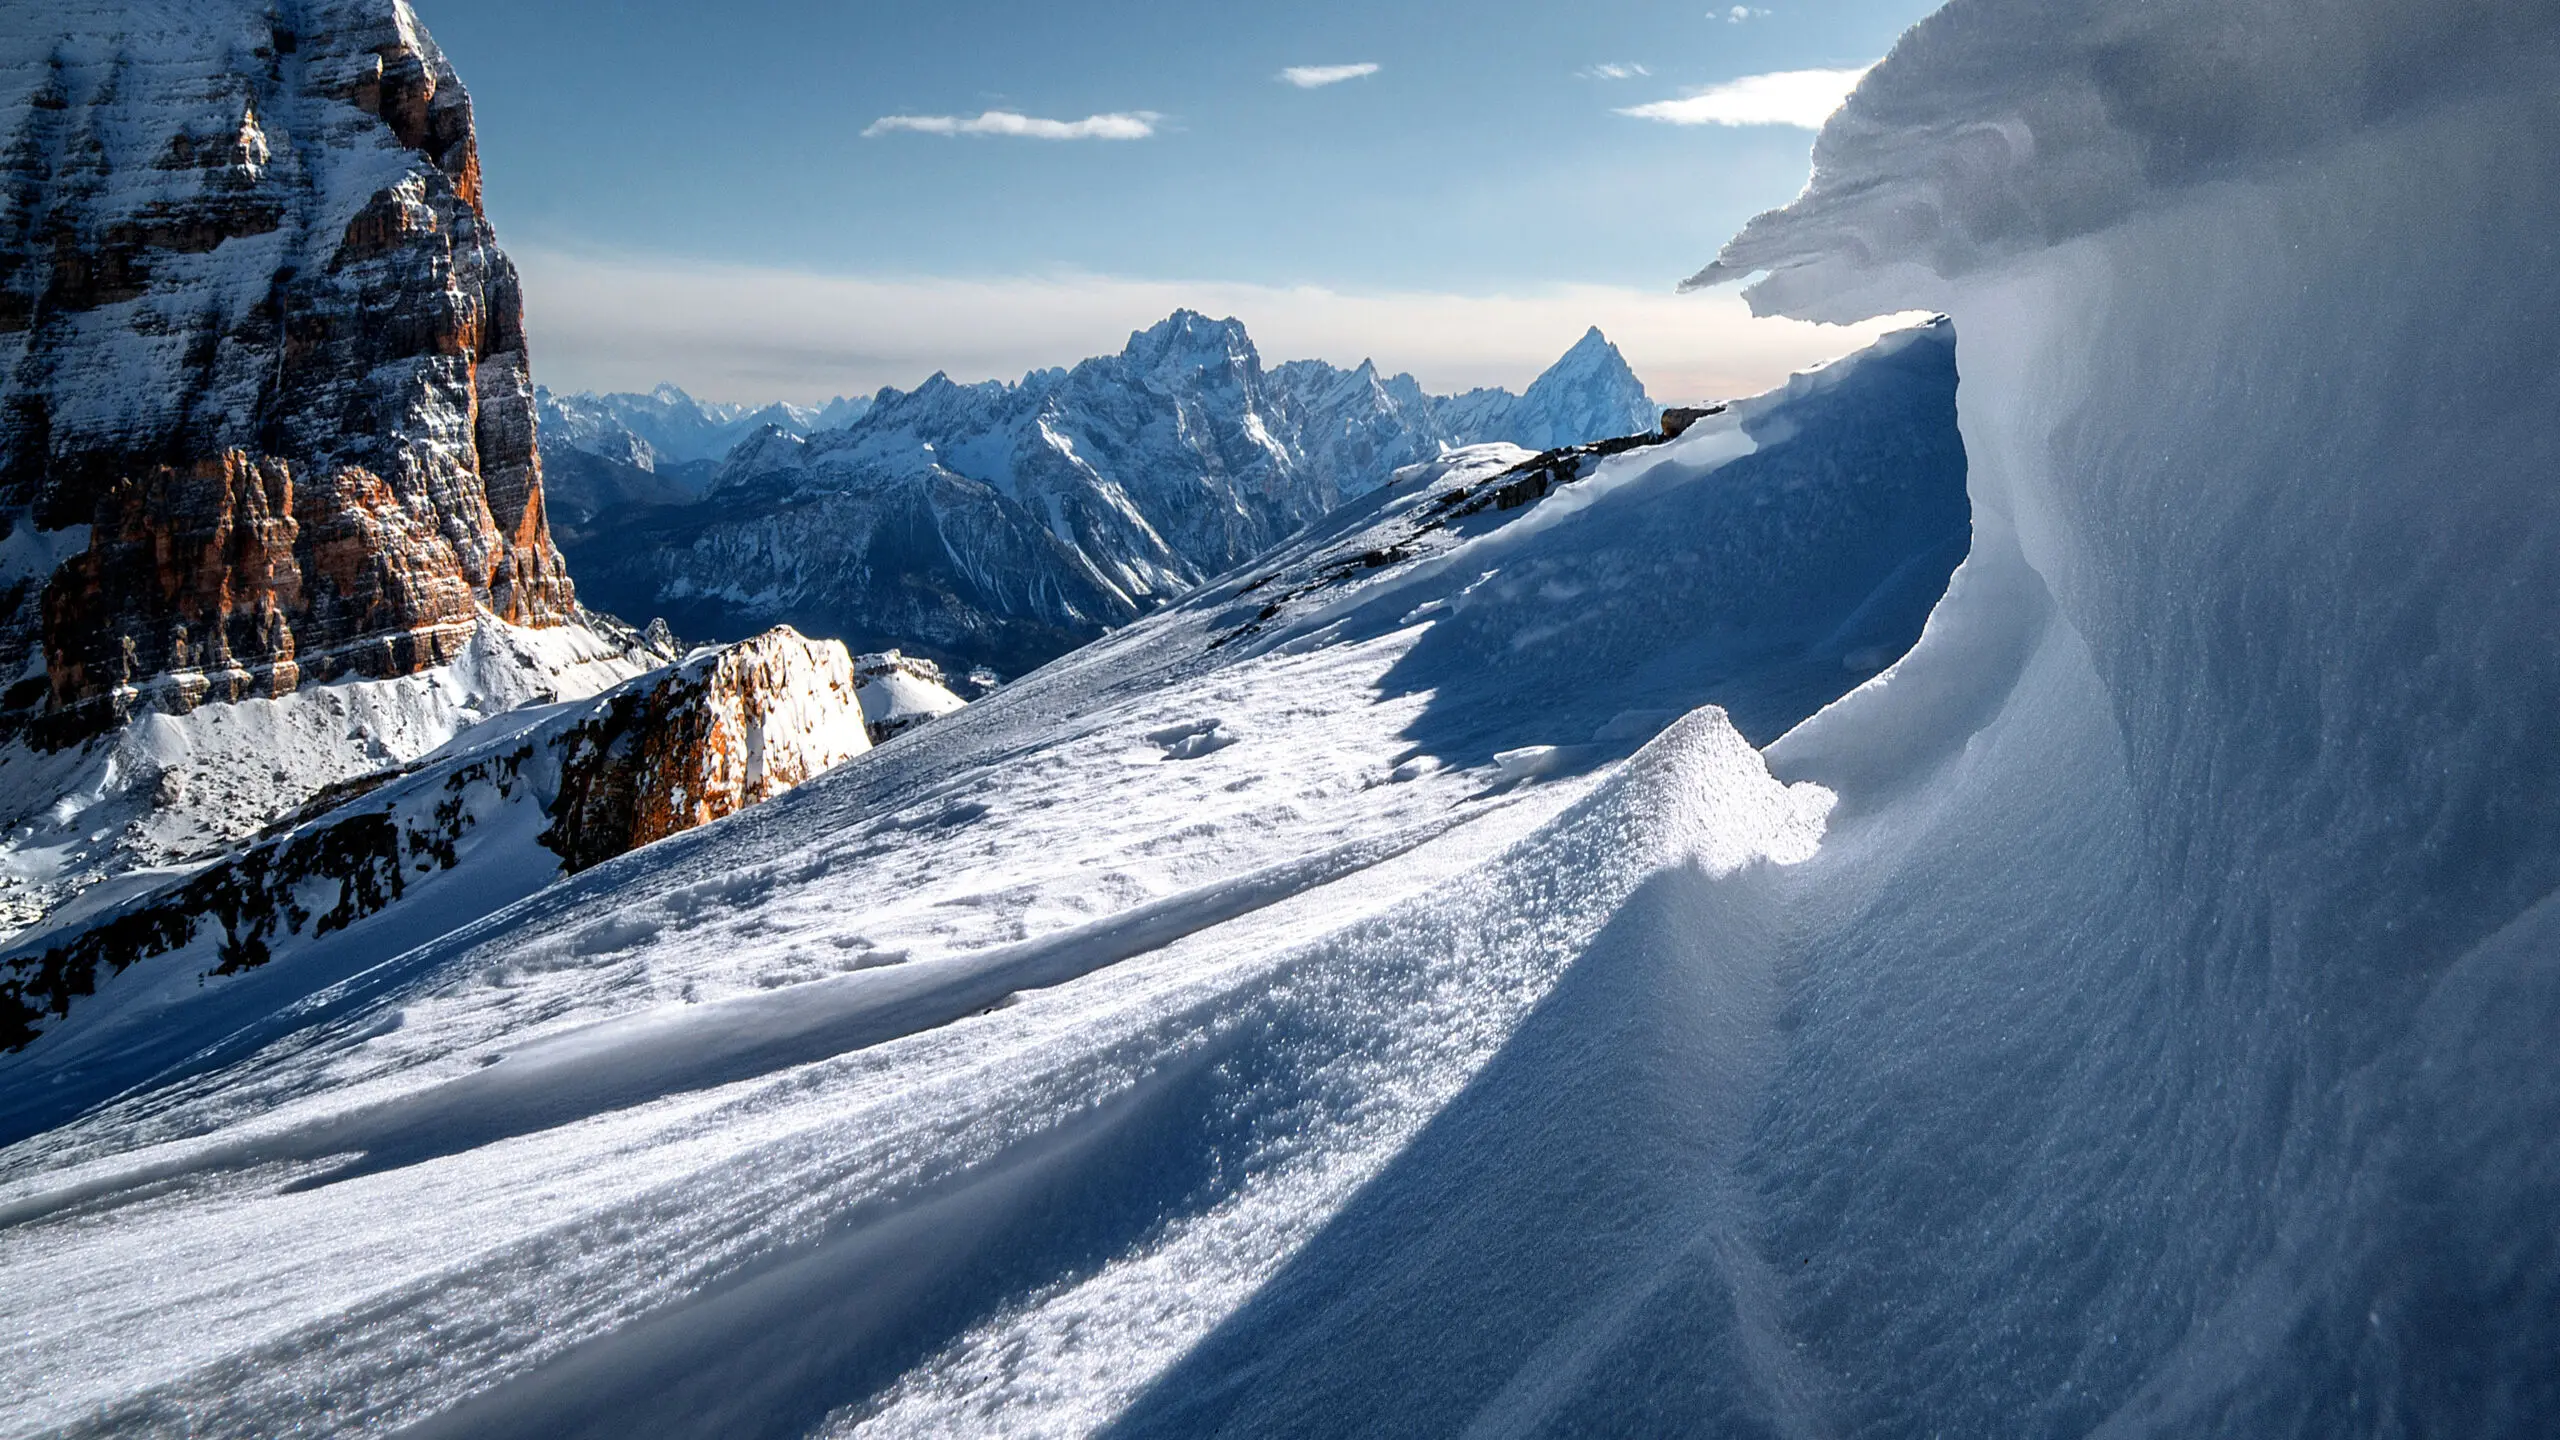 Skiing in the beautiful Lagazuoi area, part of the biggest ski resort of the world, the Dolomiti Superski